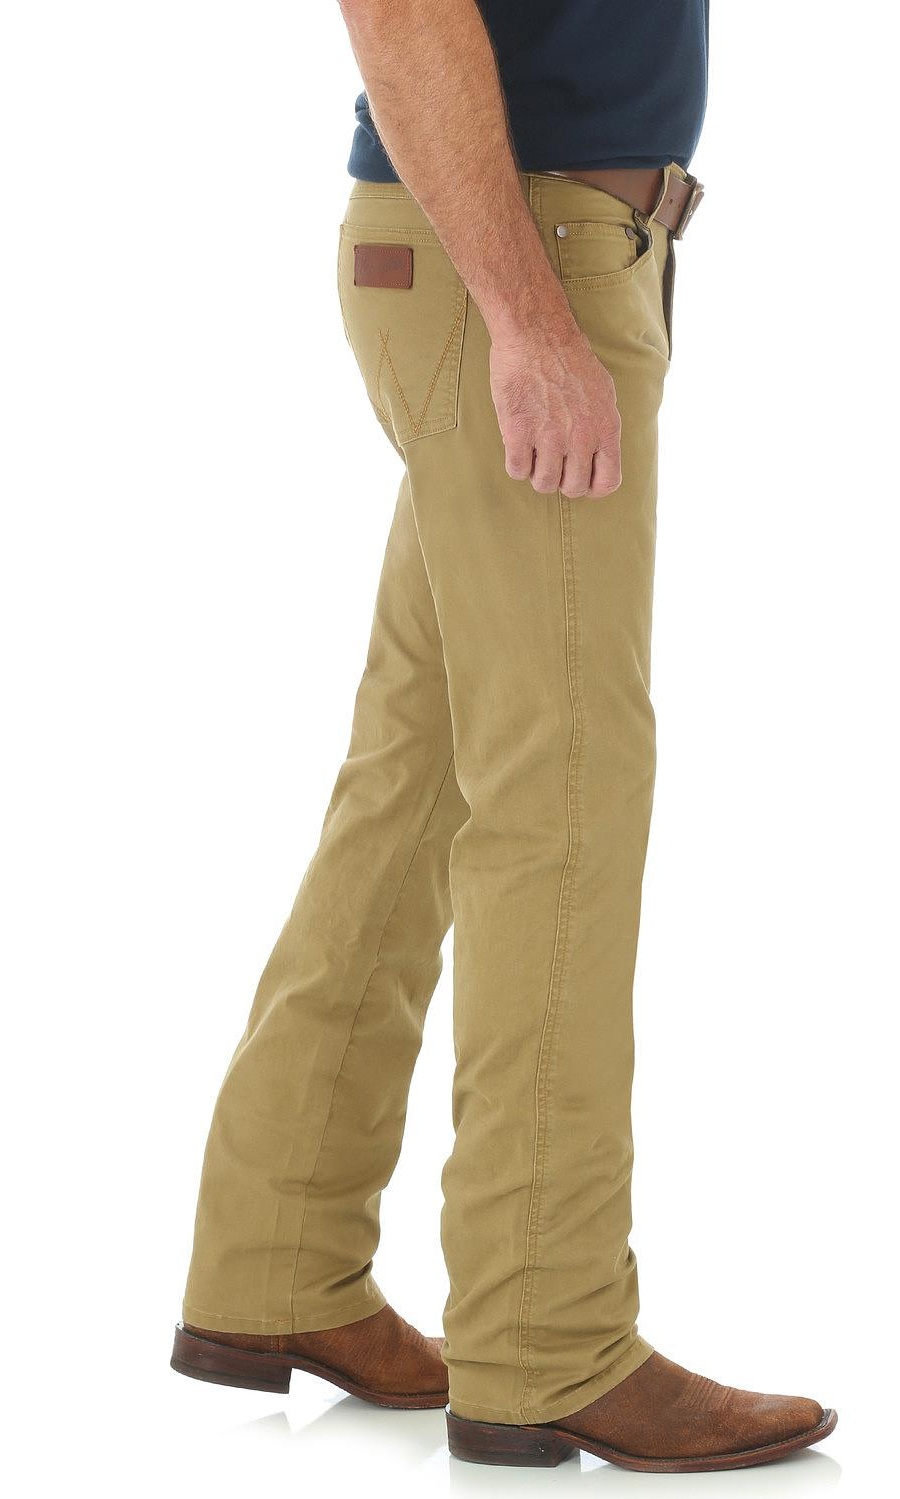 Wrangler Men's Retro Slim Fit Straight Leg Khaki Jeans - 88Mwzan - image 2 of 3